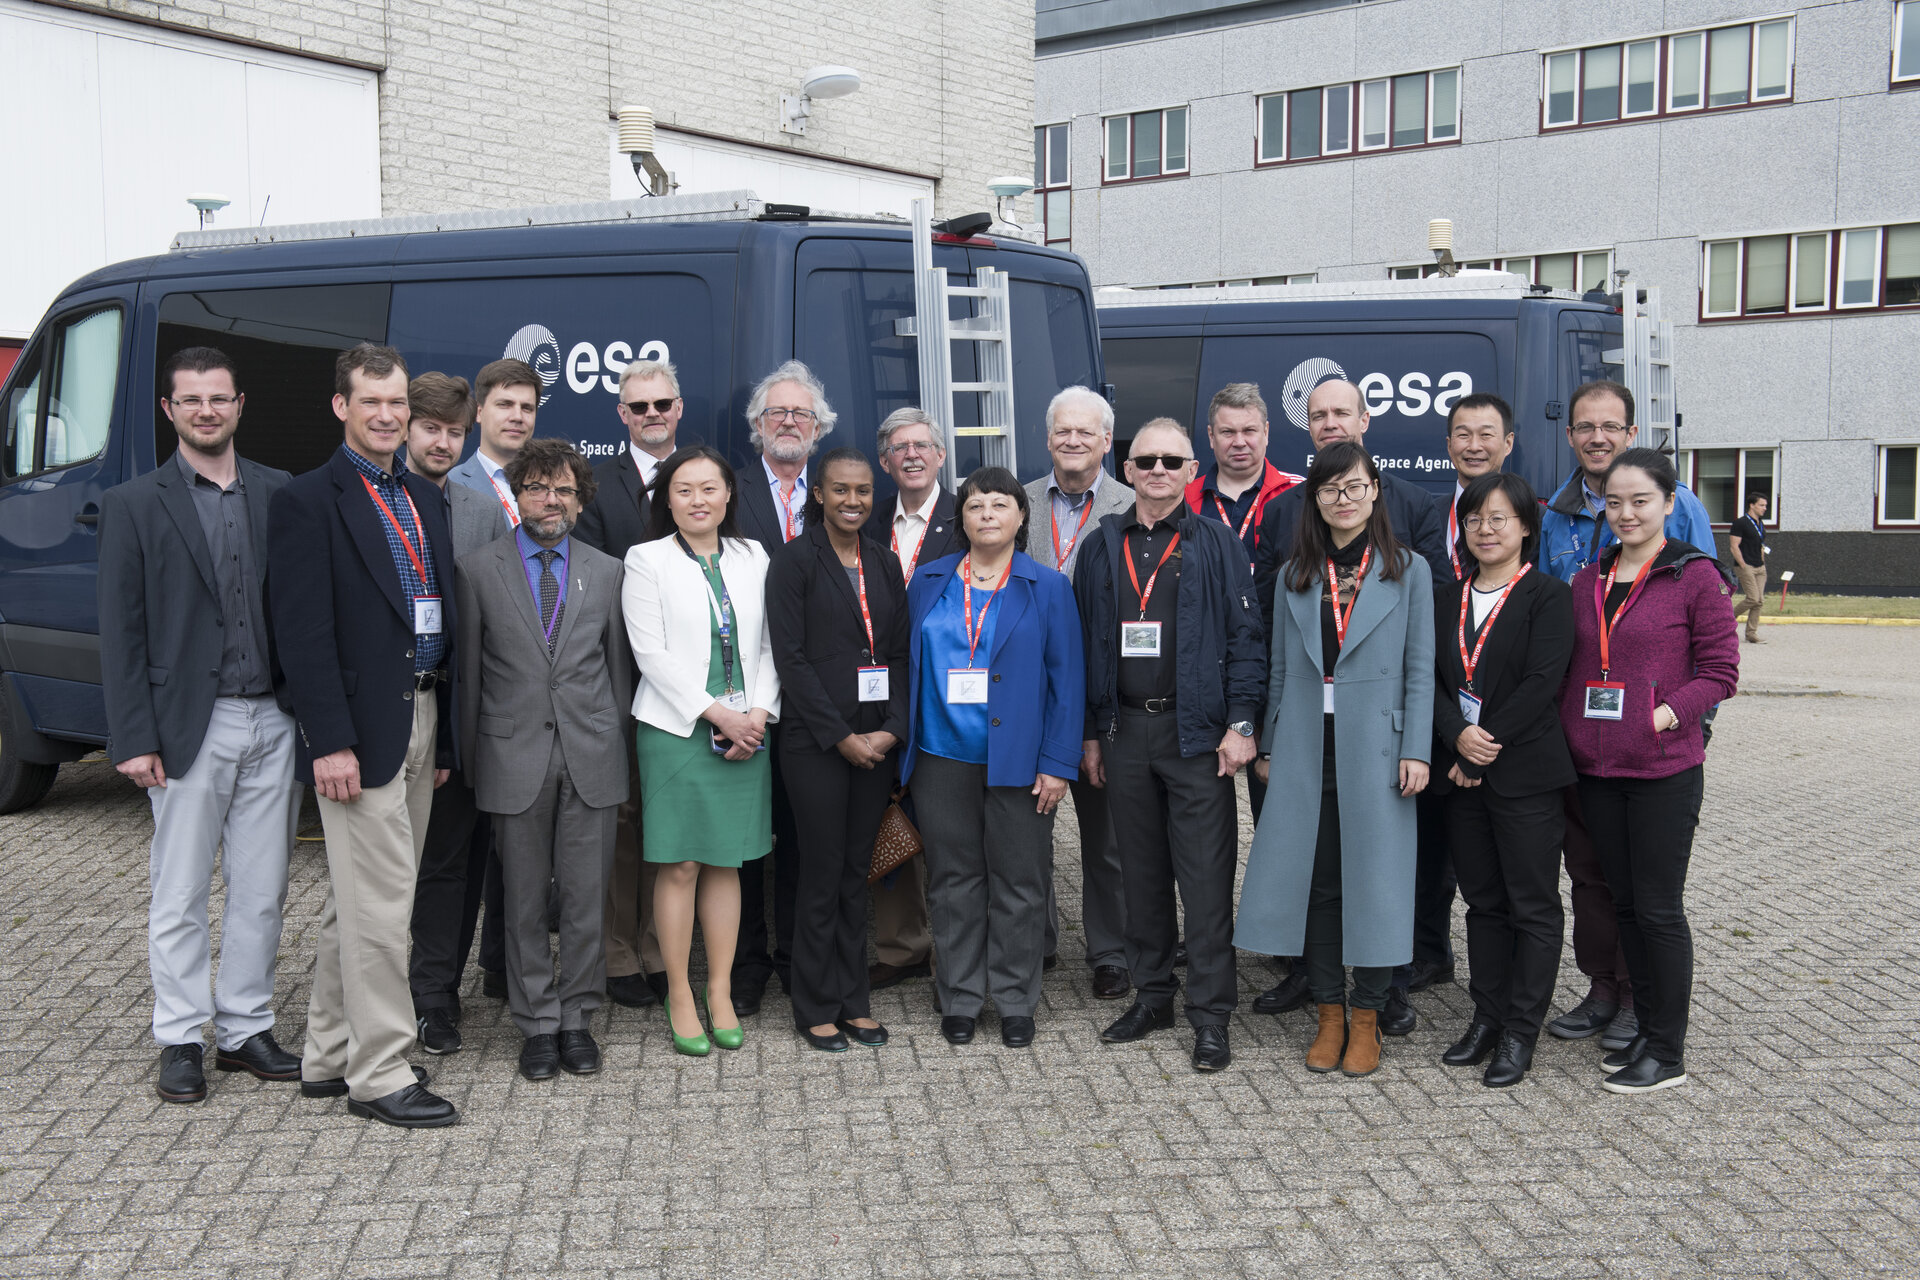 UN ICG delegates beside Galileo vans